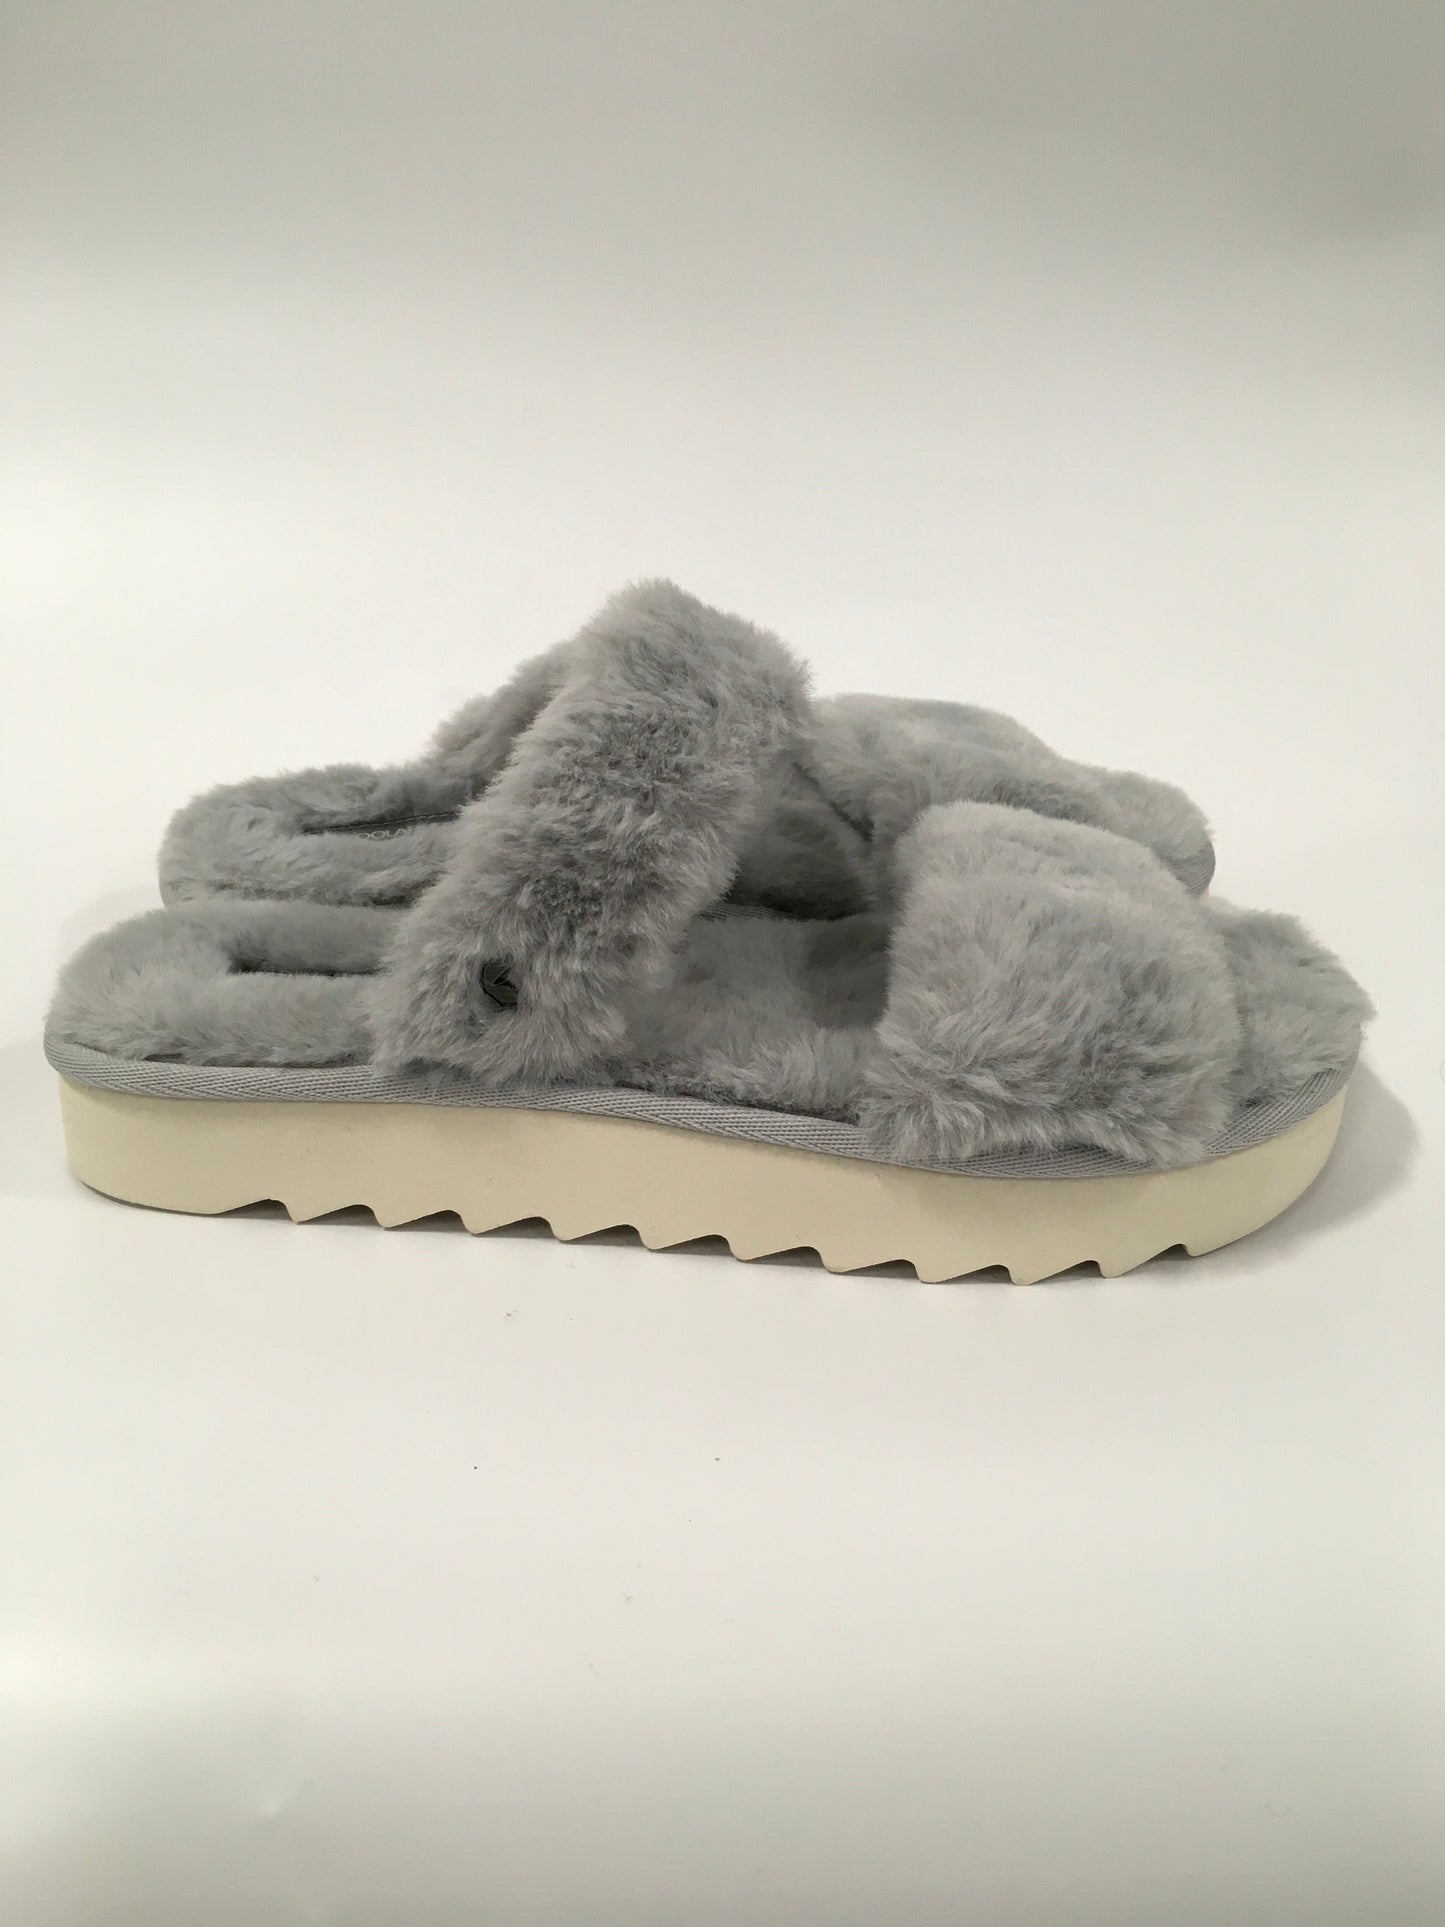 Grey Sandals Flats Koolaburra By Ugg, Size 8